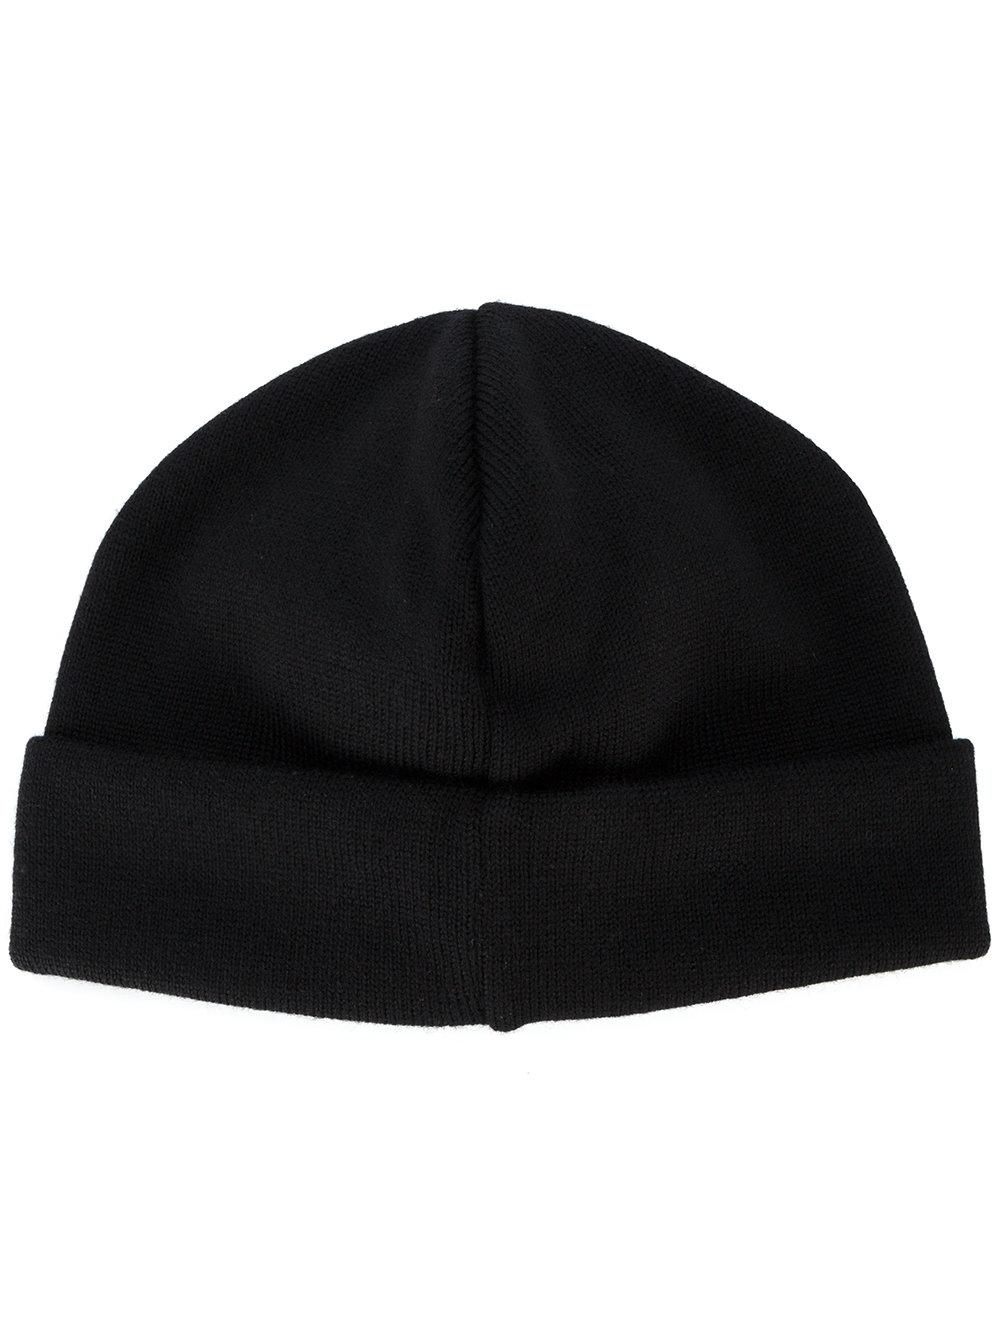 Lyst - Balenciaga 2017 Beanie Hat in Black for Men